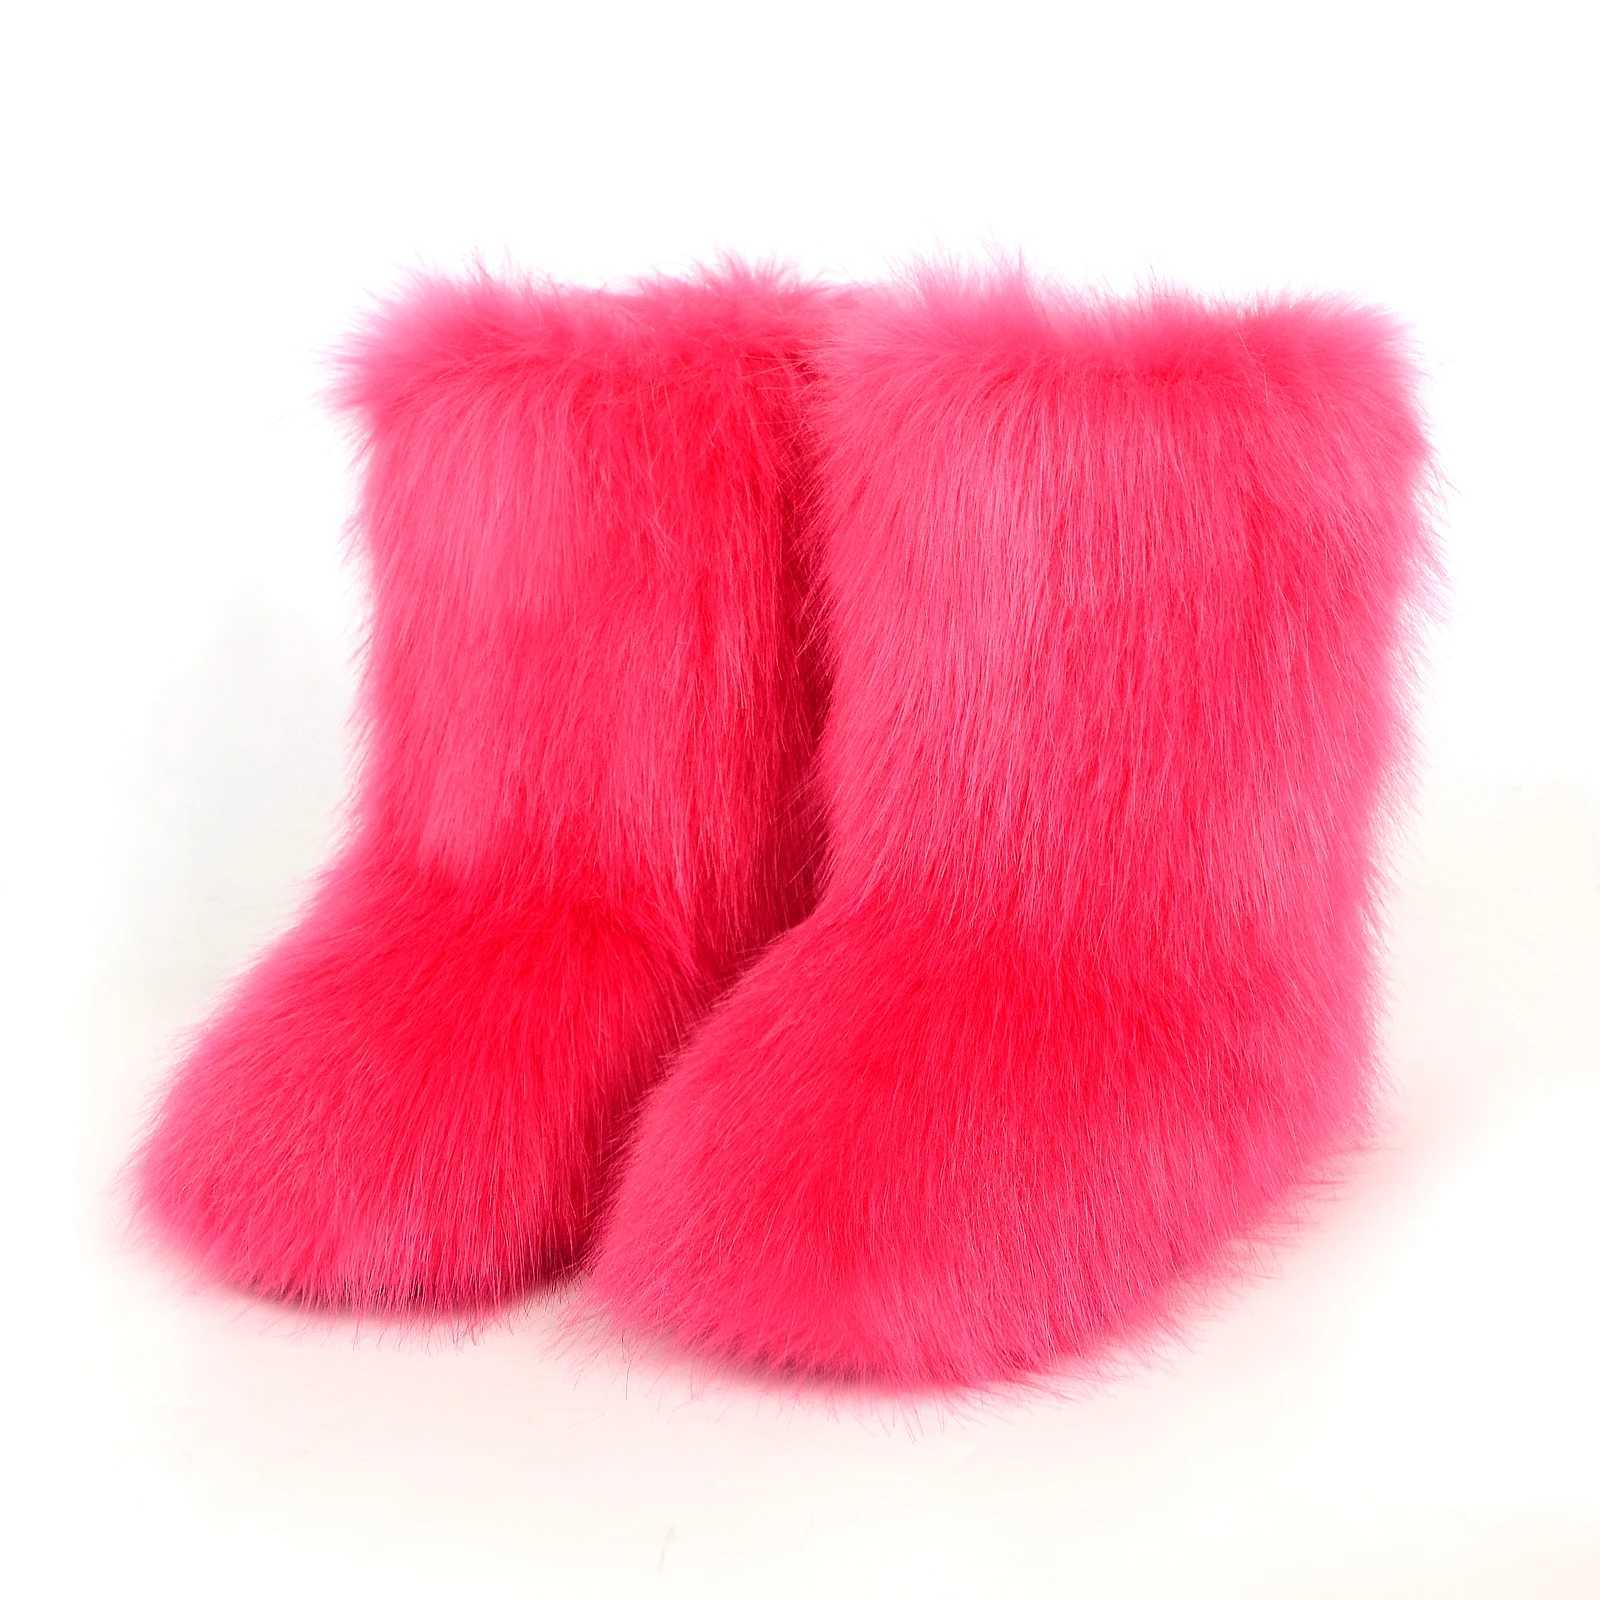 Dame Winter Schuhe Pelz Stiefel Y2k Frauen Fuzzy Stiefel Flauschigen Pelzigen Faux Pelz Schnee Stiefel Plüsch Warme Bottes Mode damen Schuhe Schuhe